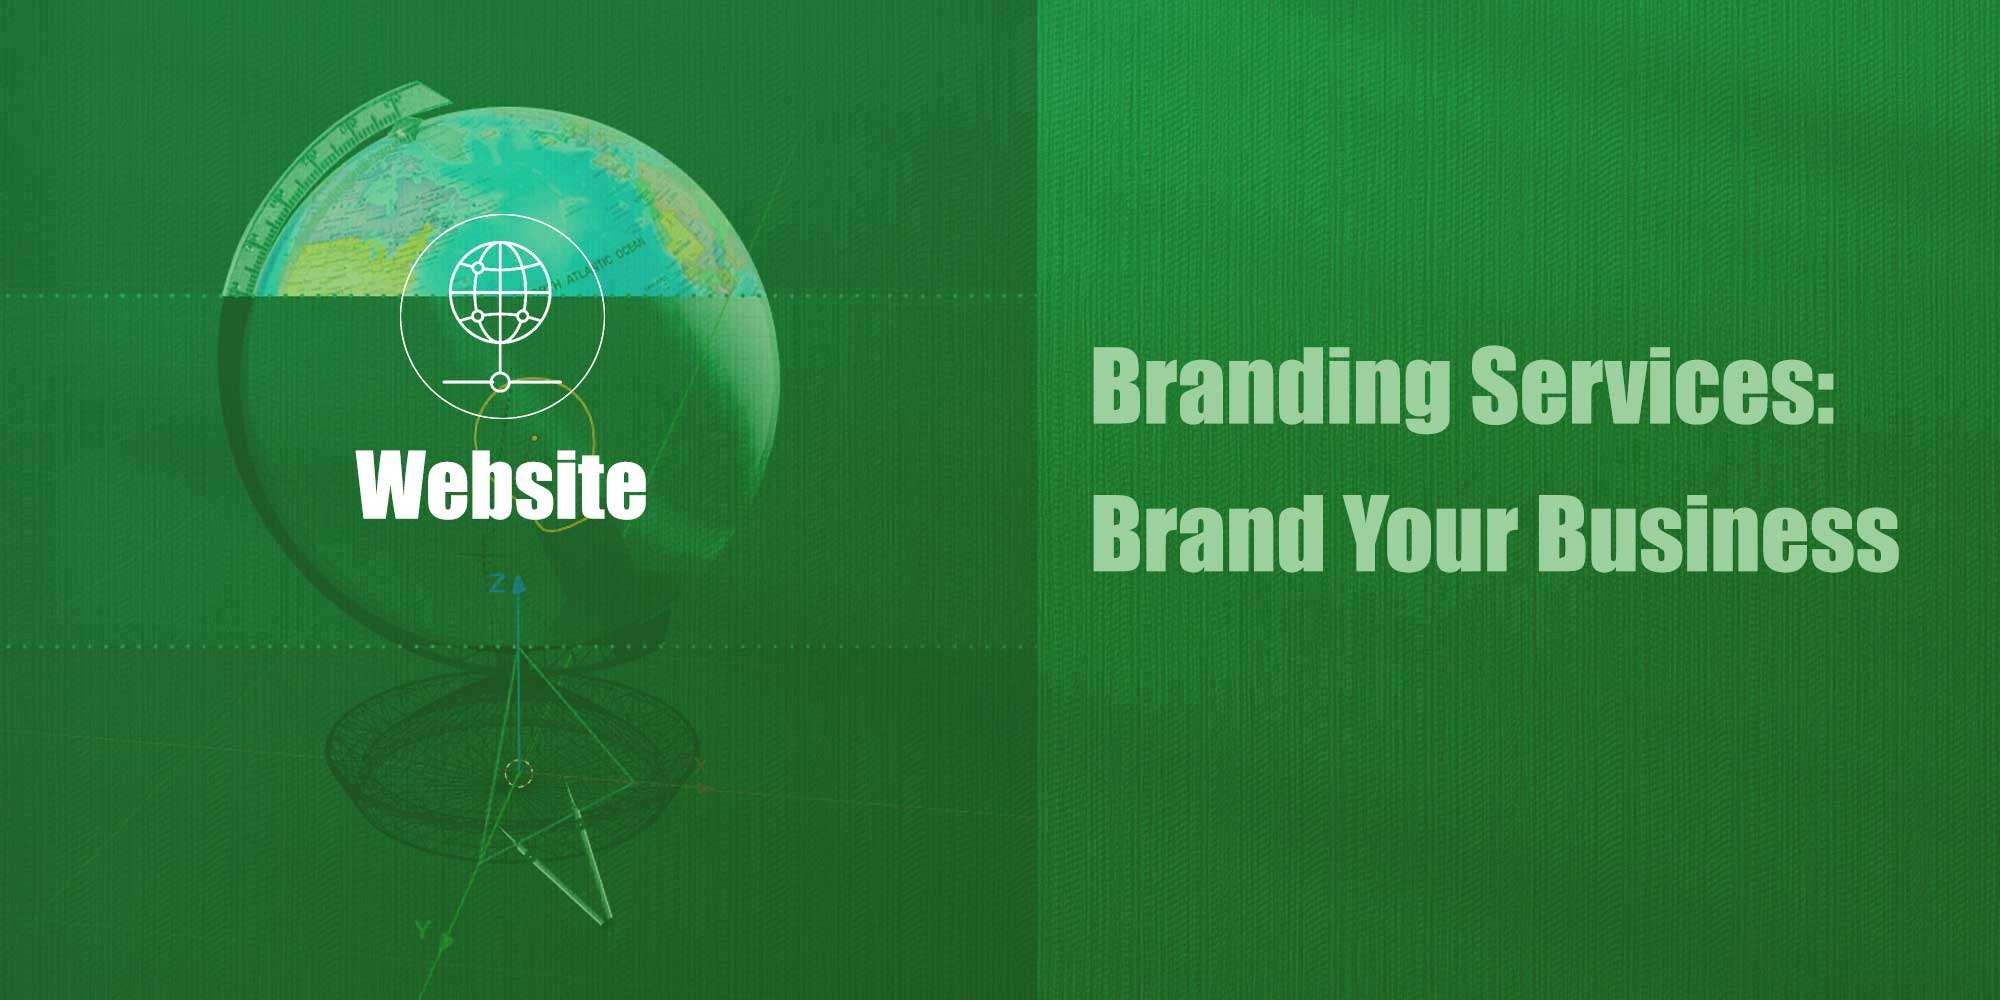 Business-Website-branding-services-brand-your-business-Website